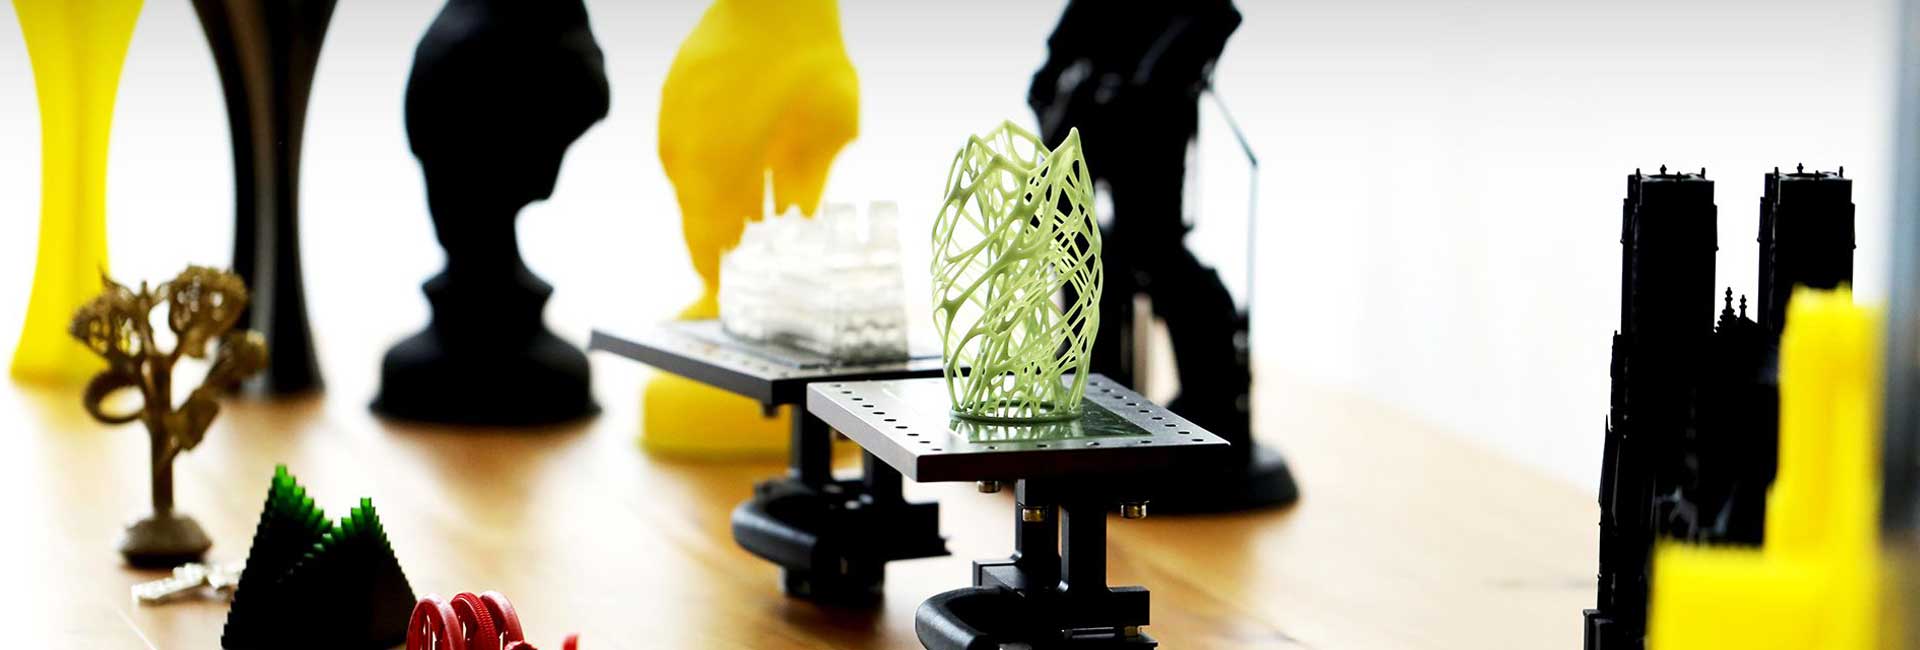 Carima IM2 : stampante 3D desktop ad alta precisione